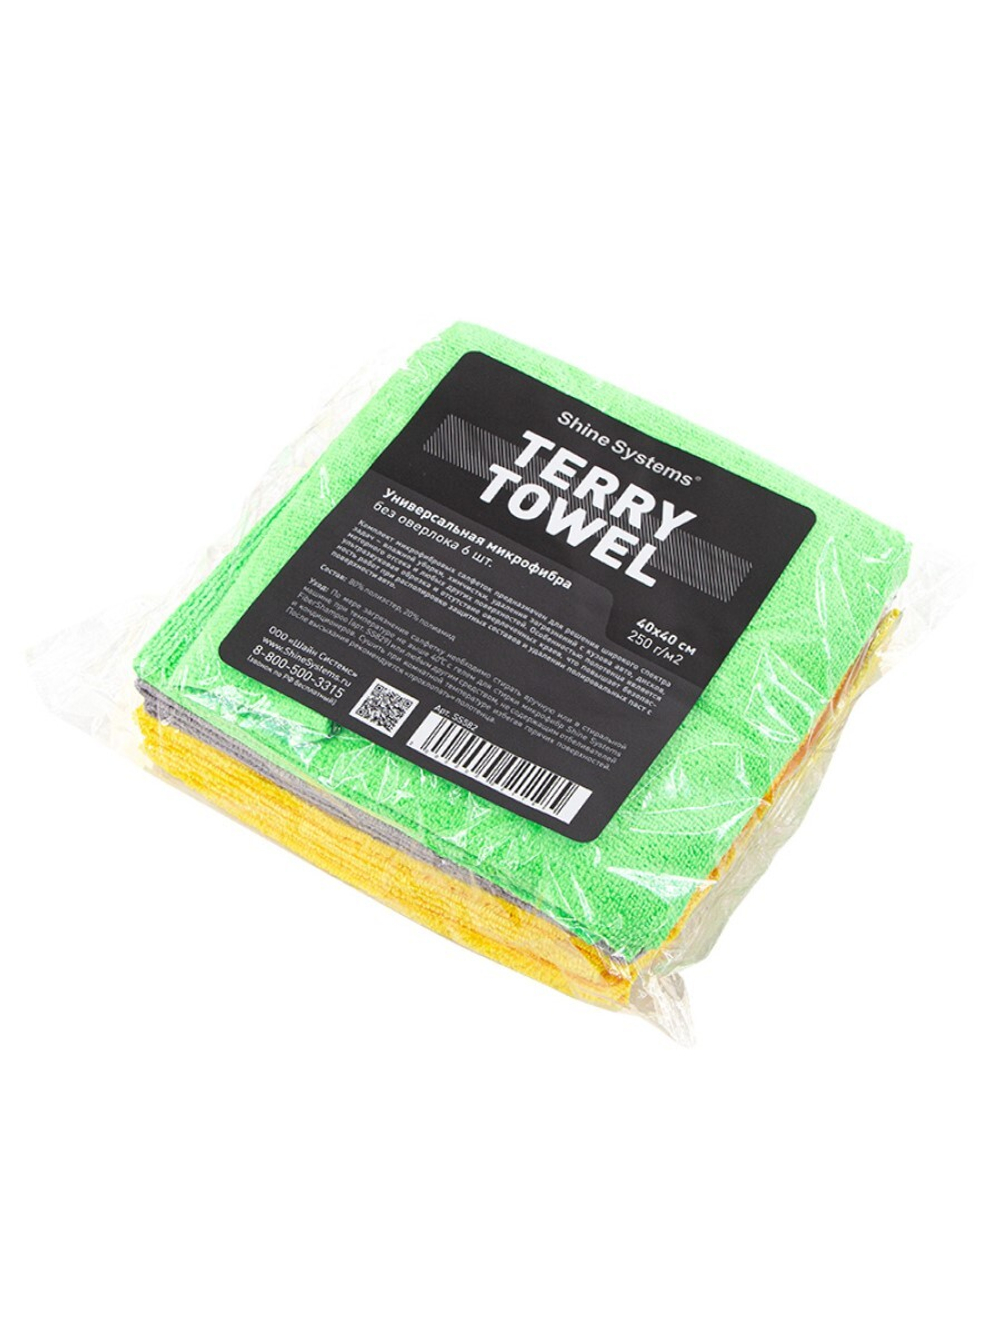 Shine Systems Terry Towel - универсальная микрофибра без оверлока 40*40см, 6 шт